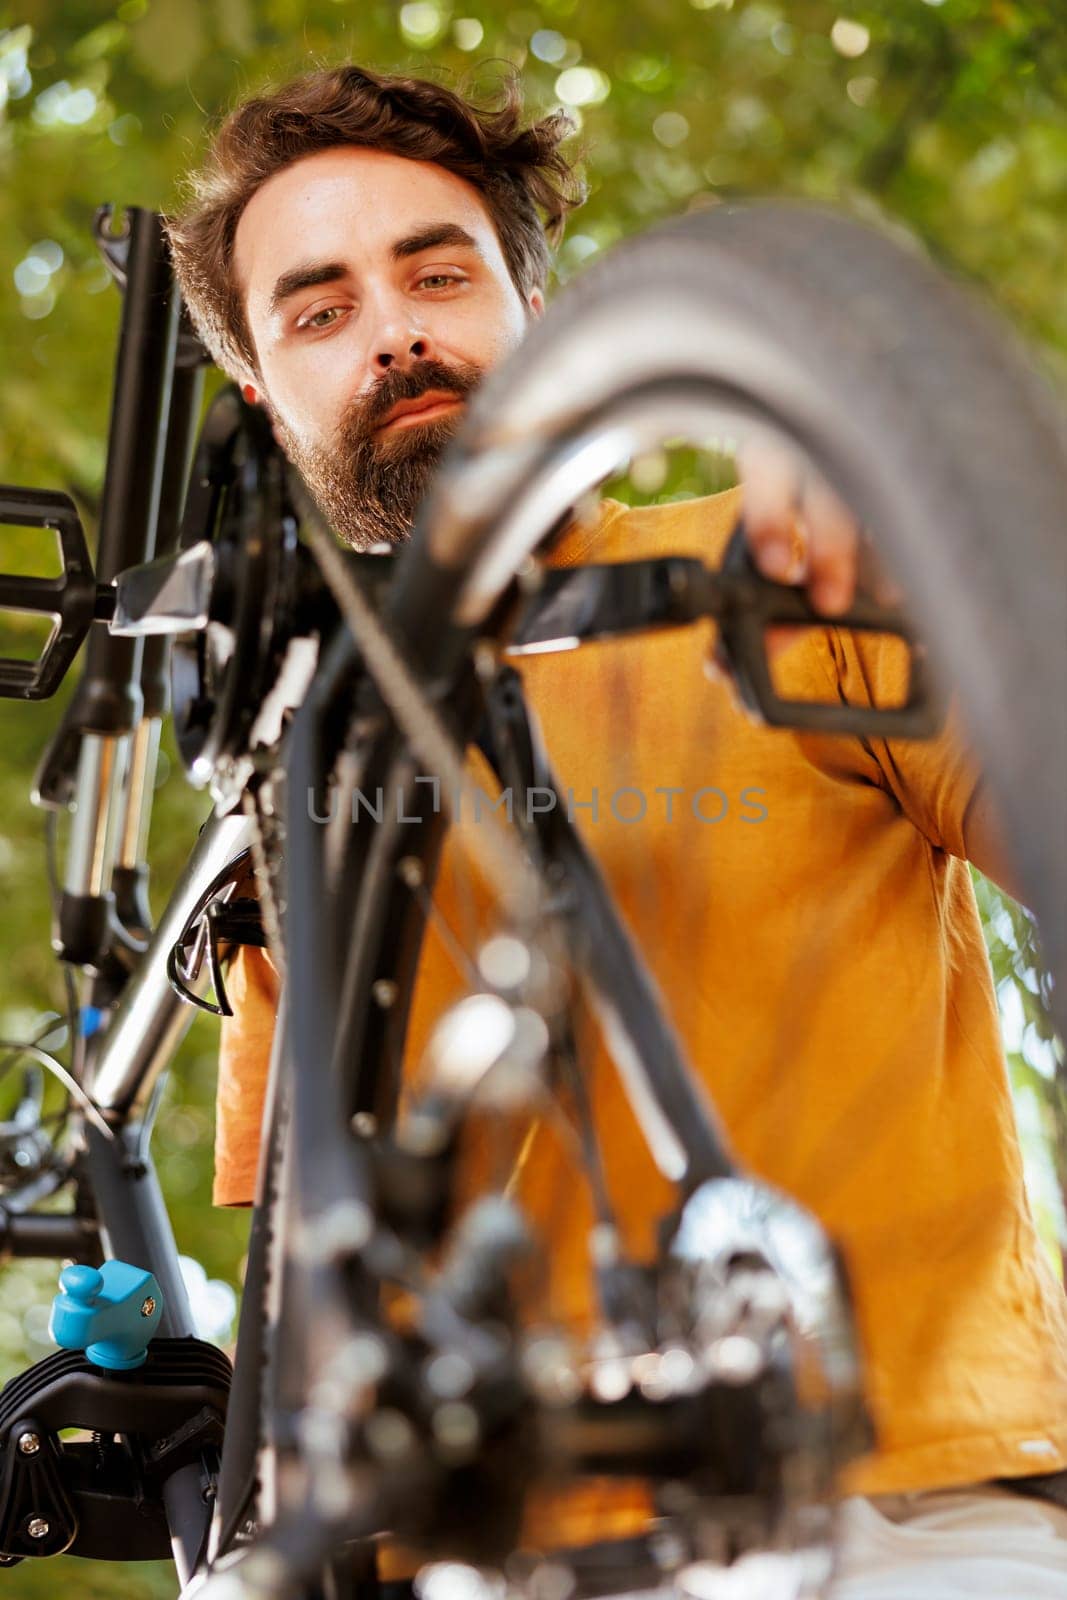 Sports-loving man inspecting bike pedal by DCStudio